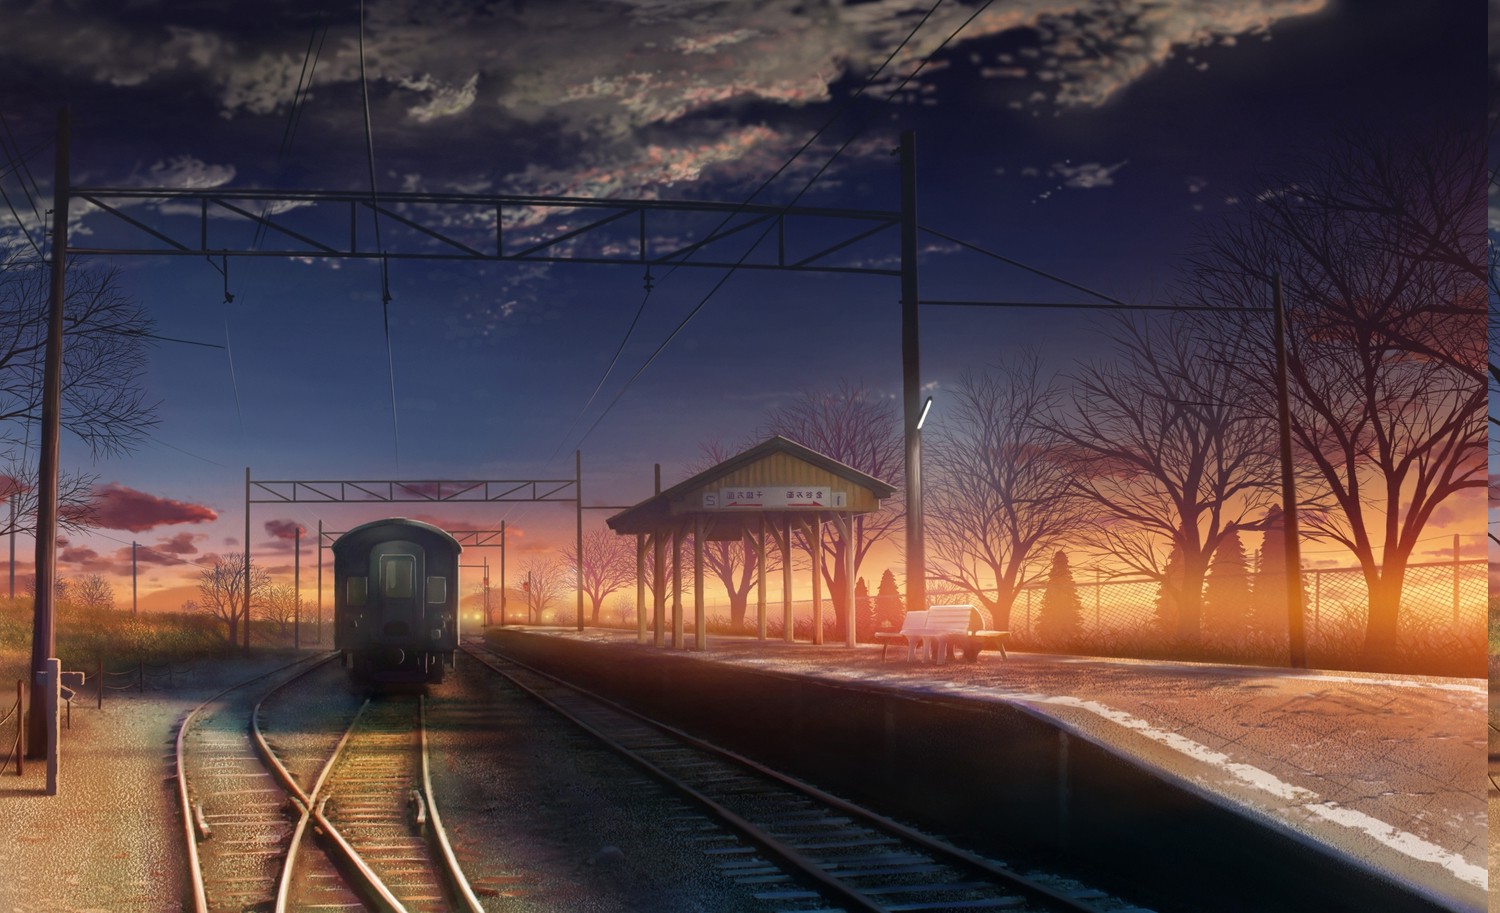 Anime Train Wallpapers